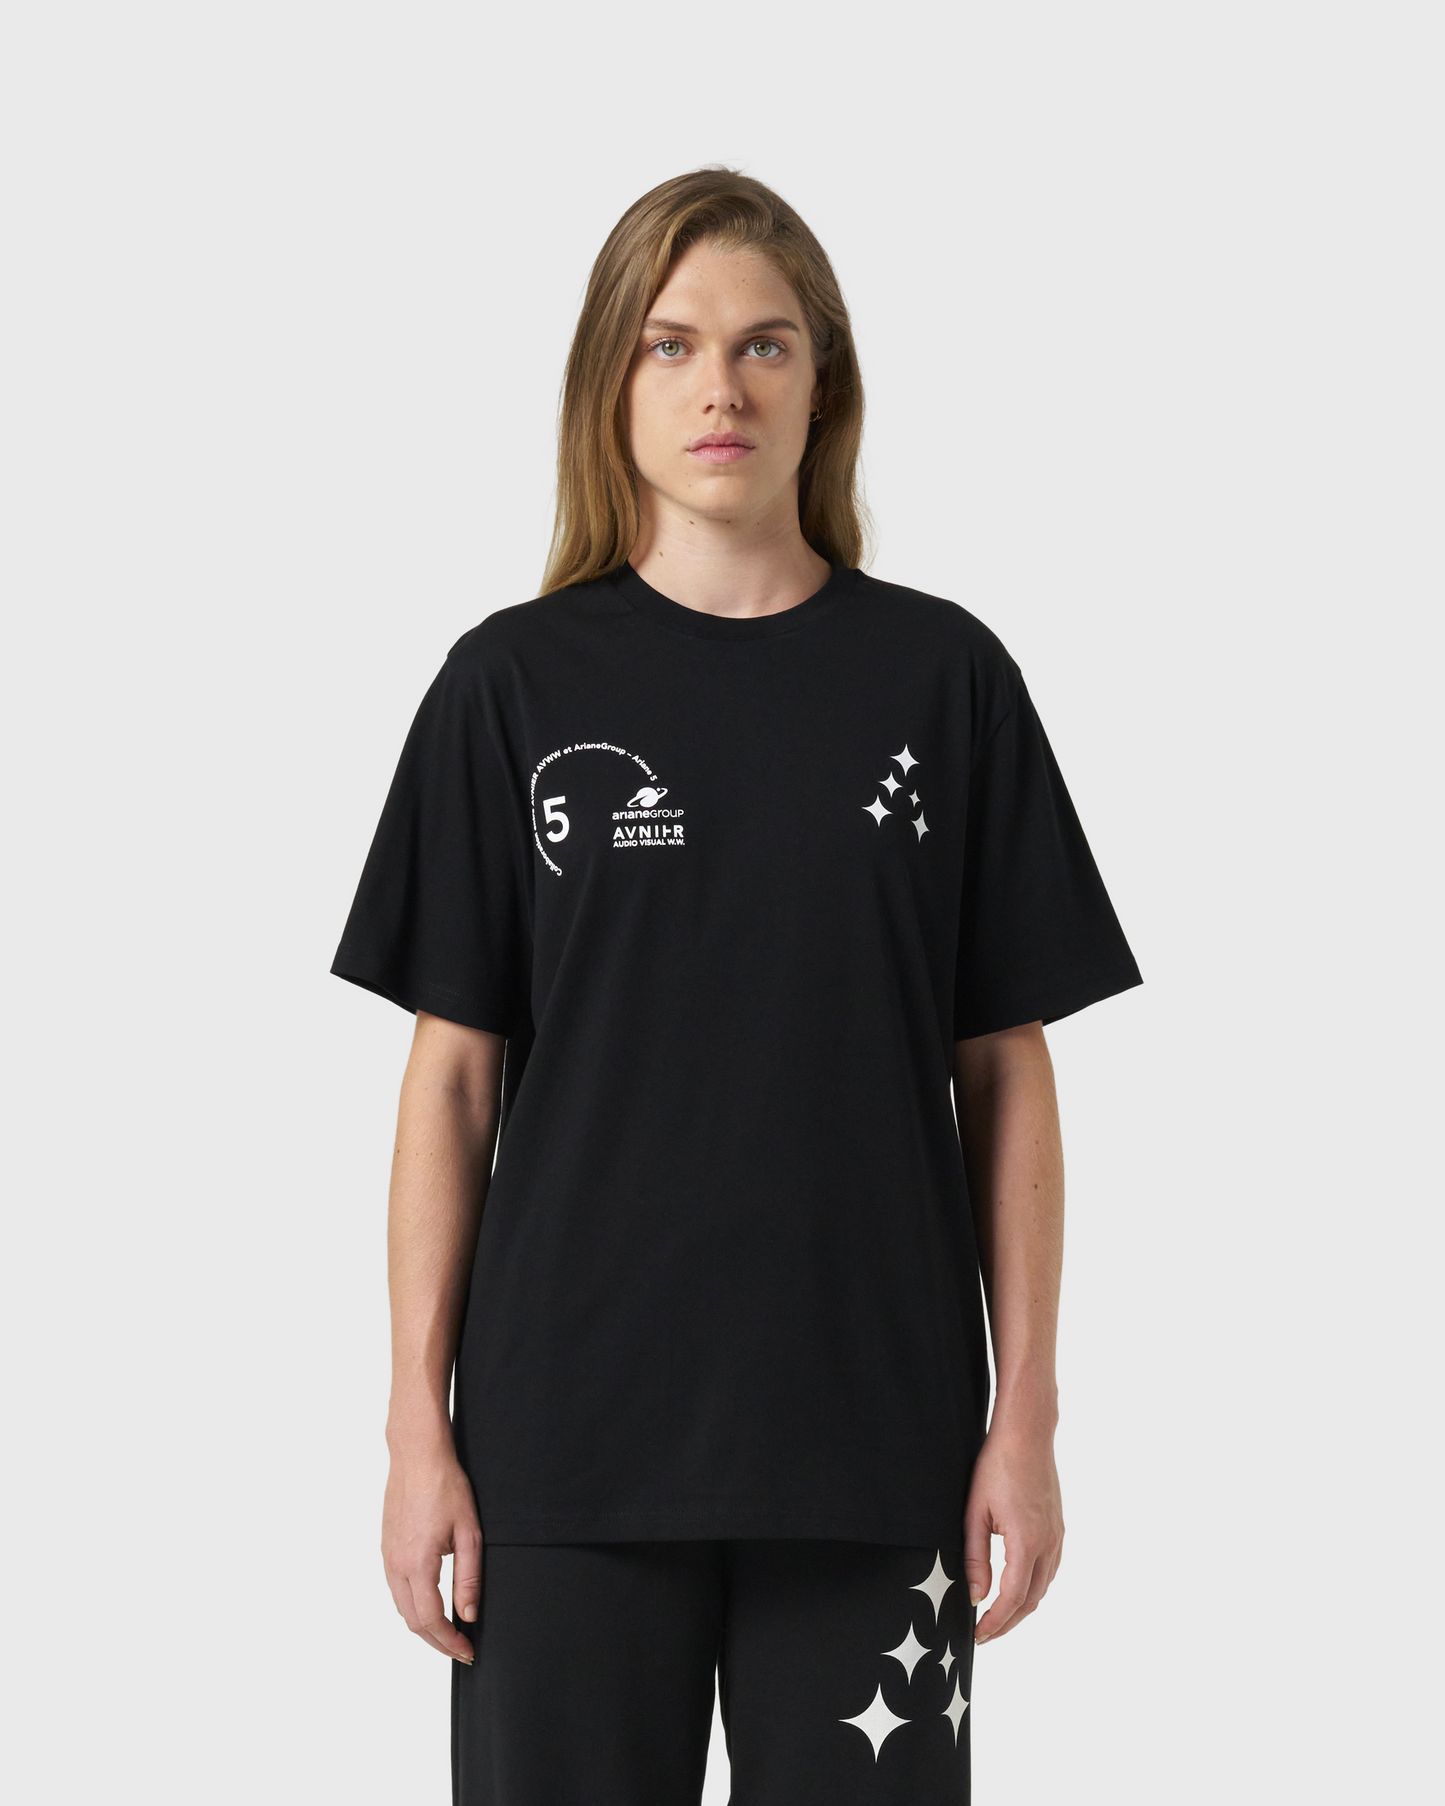 T-shirt SOURCE JUICE - ARIANEGROUP x AVNIER